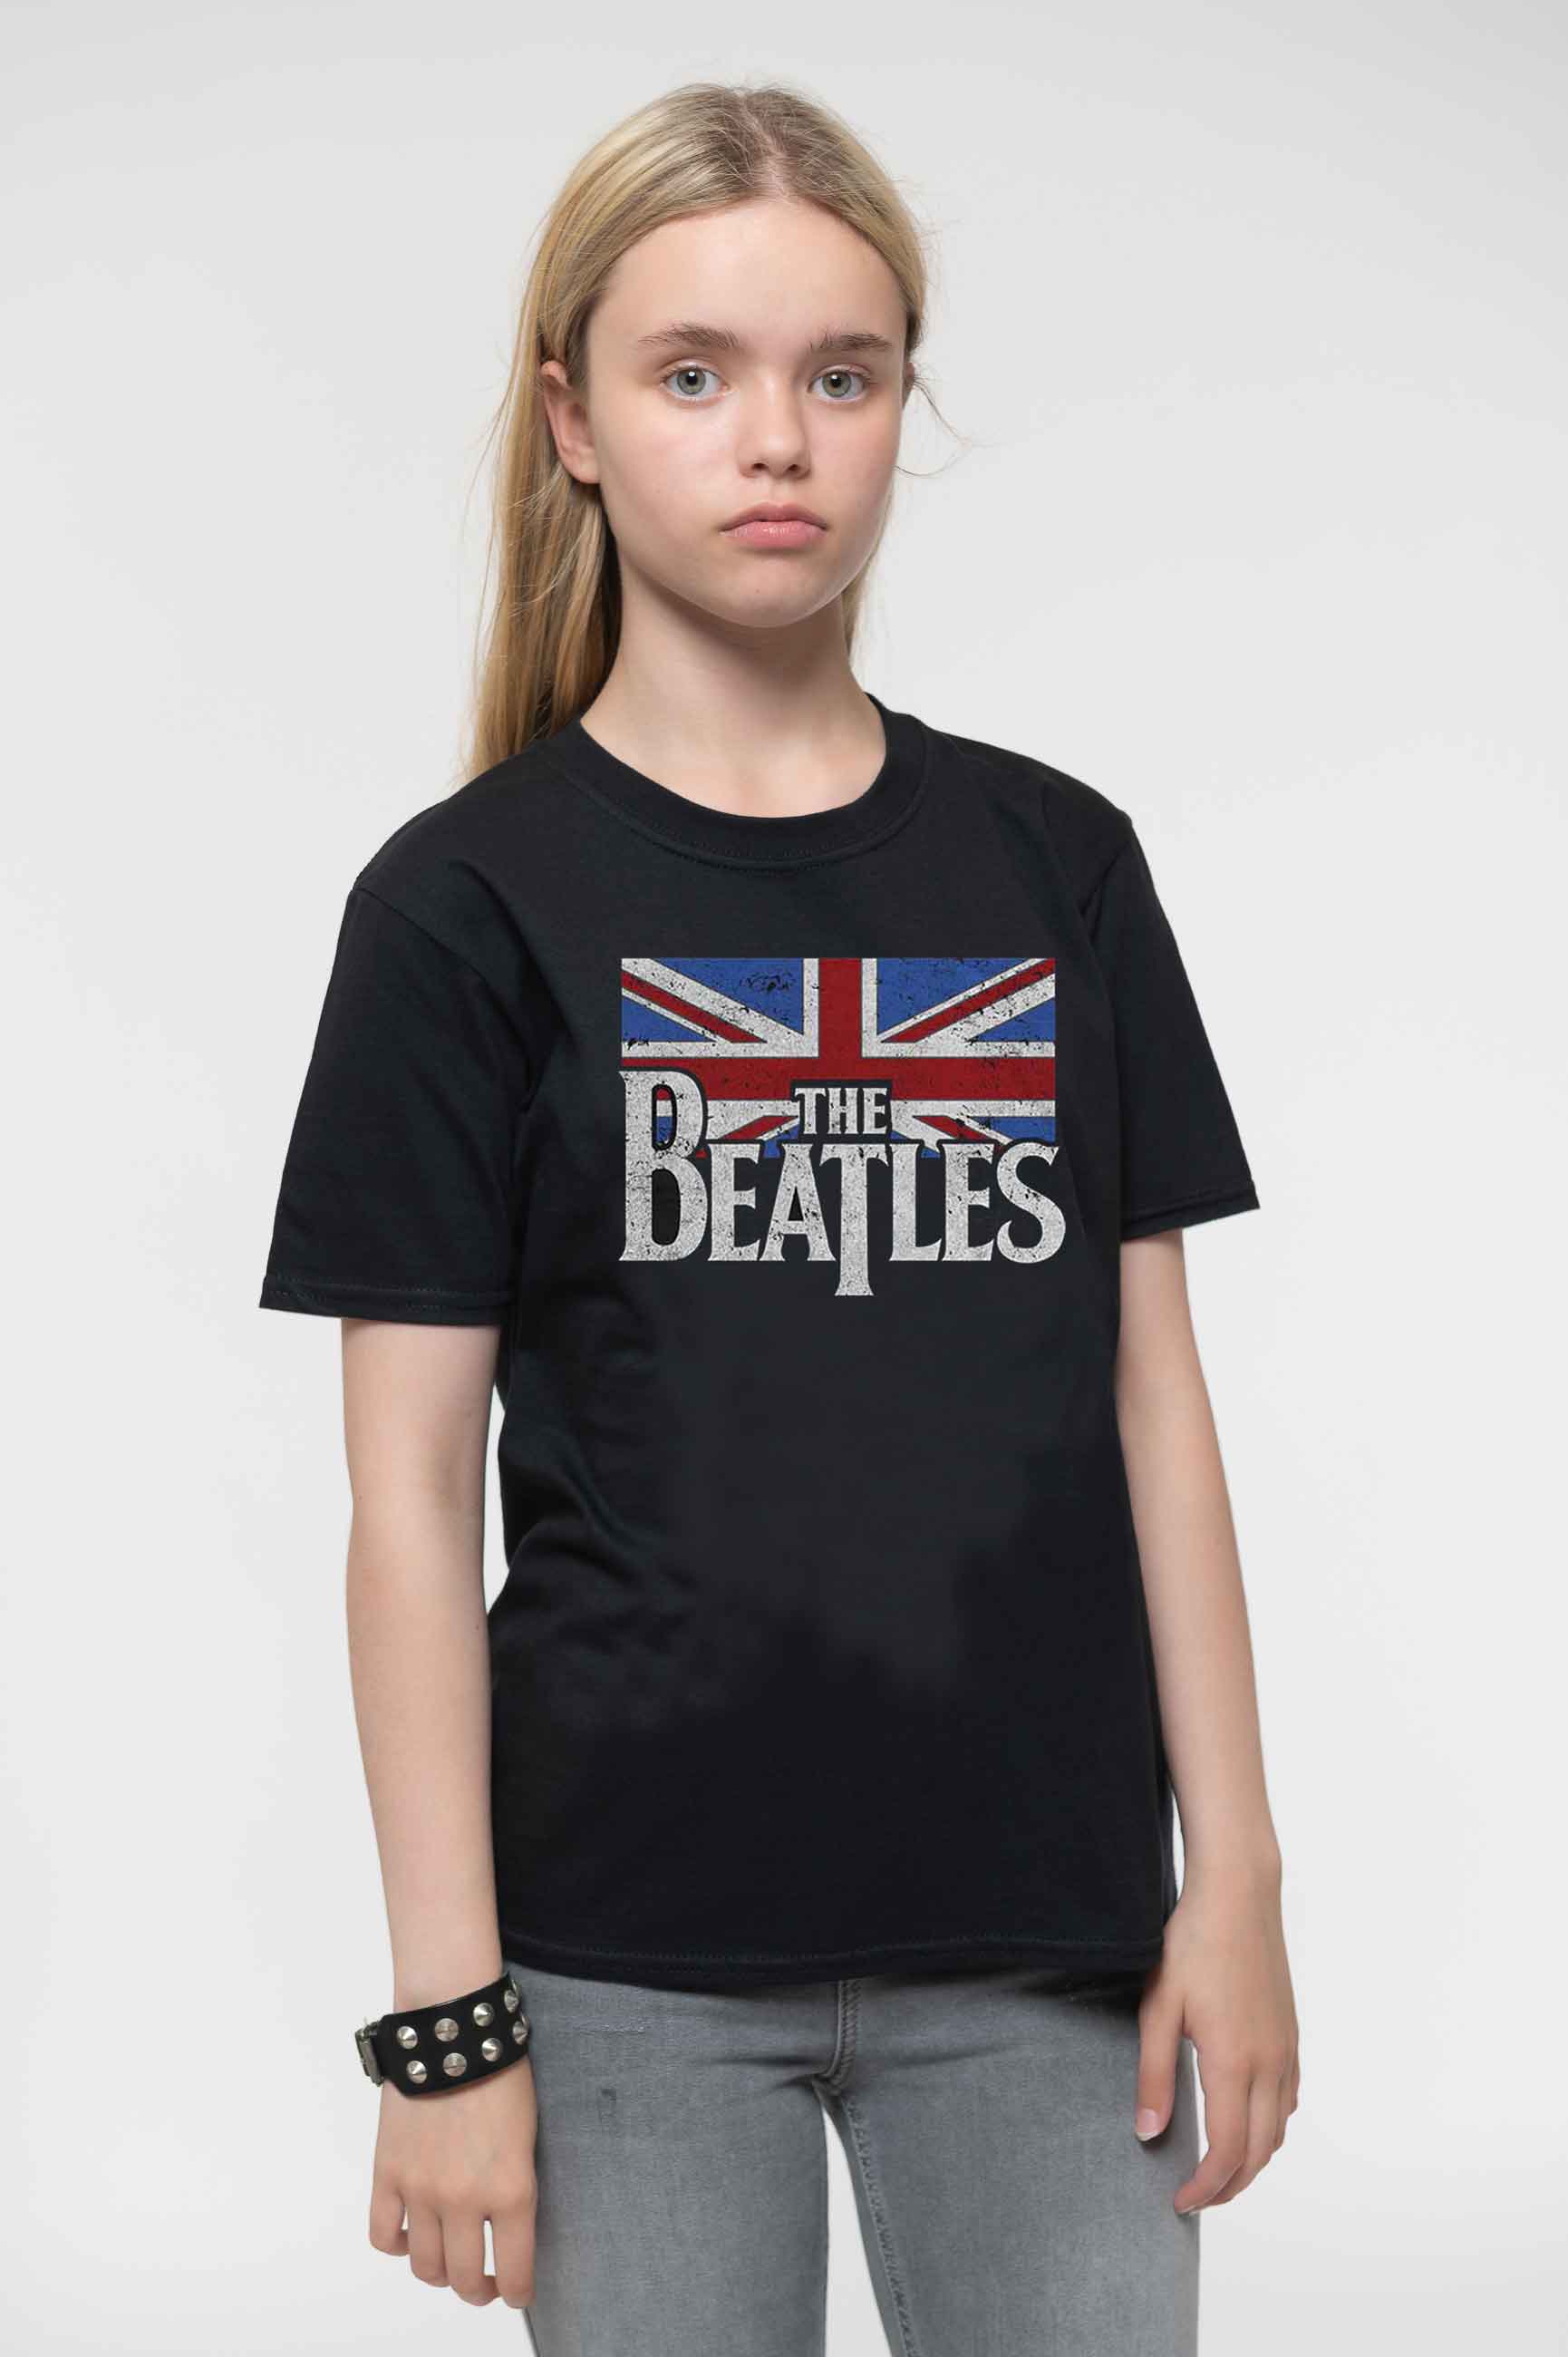 Buy Kids Beatles T-Shirts Online in UK | Hard Days Night Online